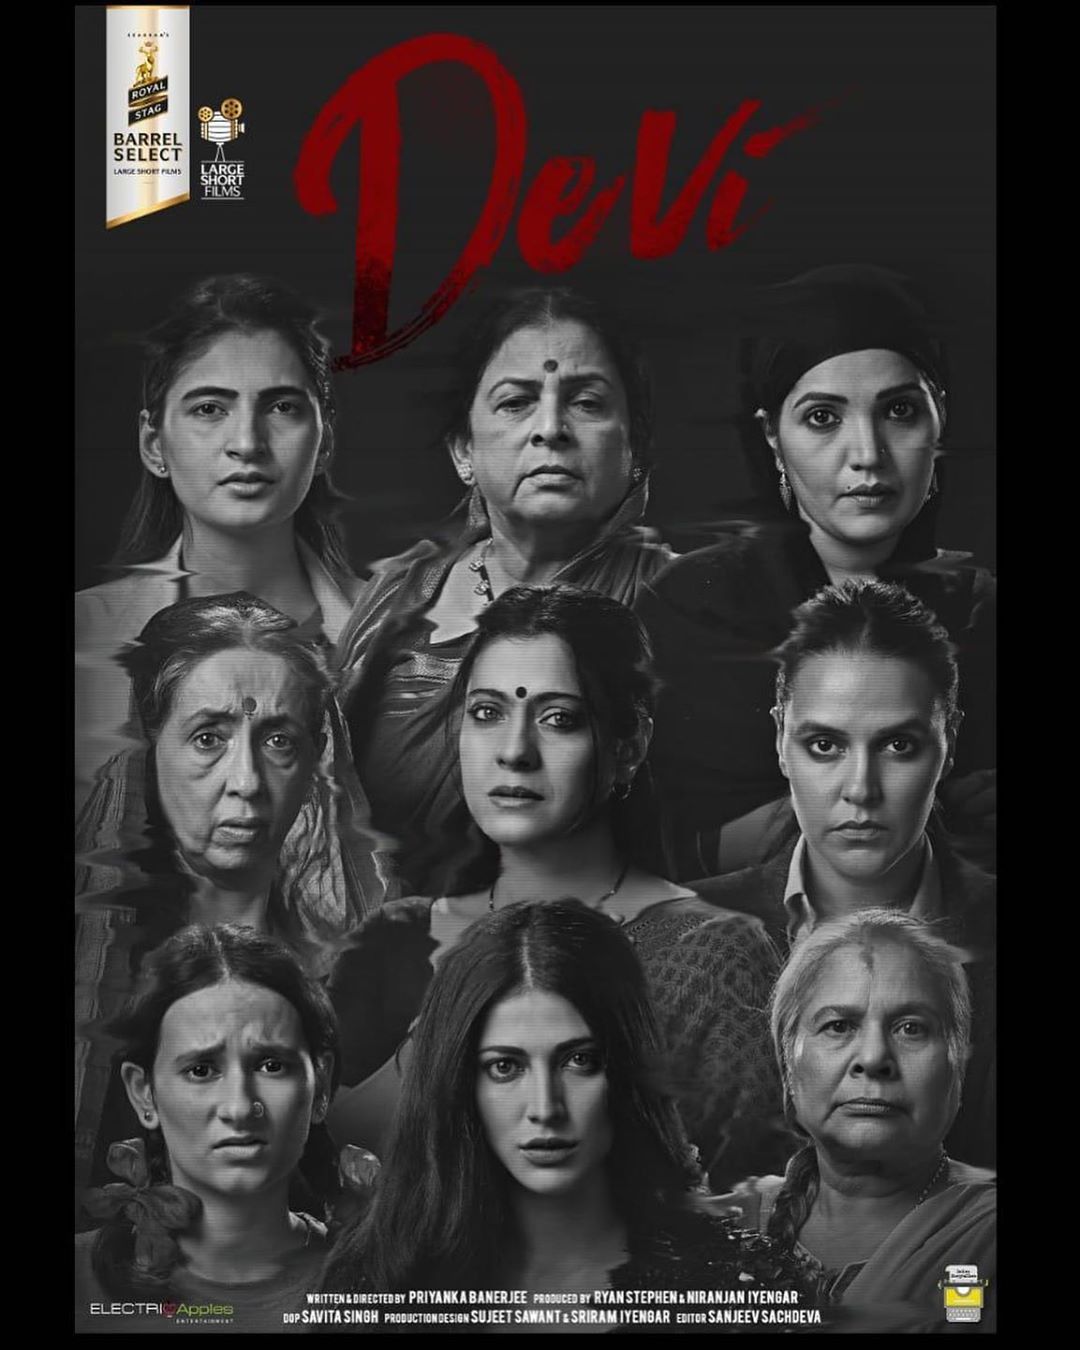 Plagiarism Row Over Kajol's Short Film Devi, Student Filmmaker Claims Film Resembles His Work Titled FOUR 